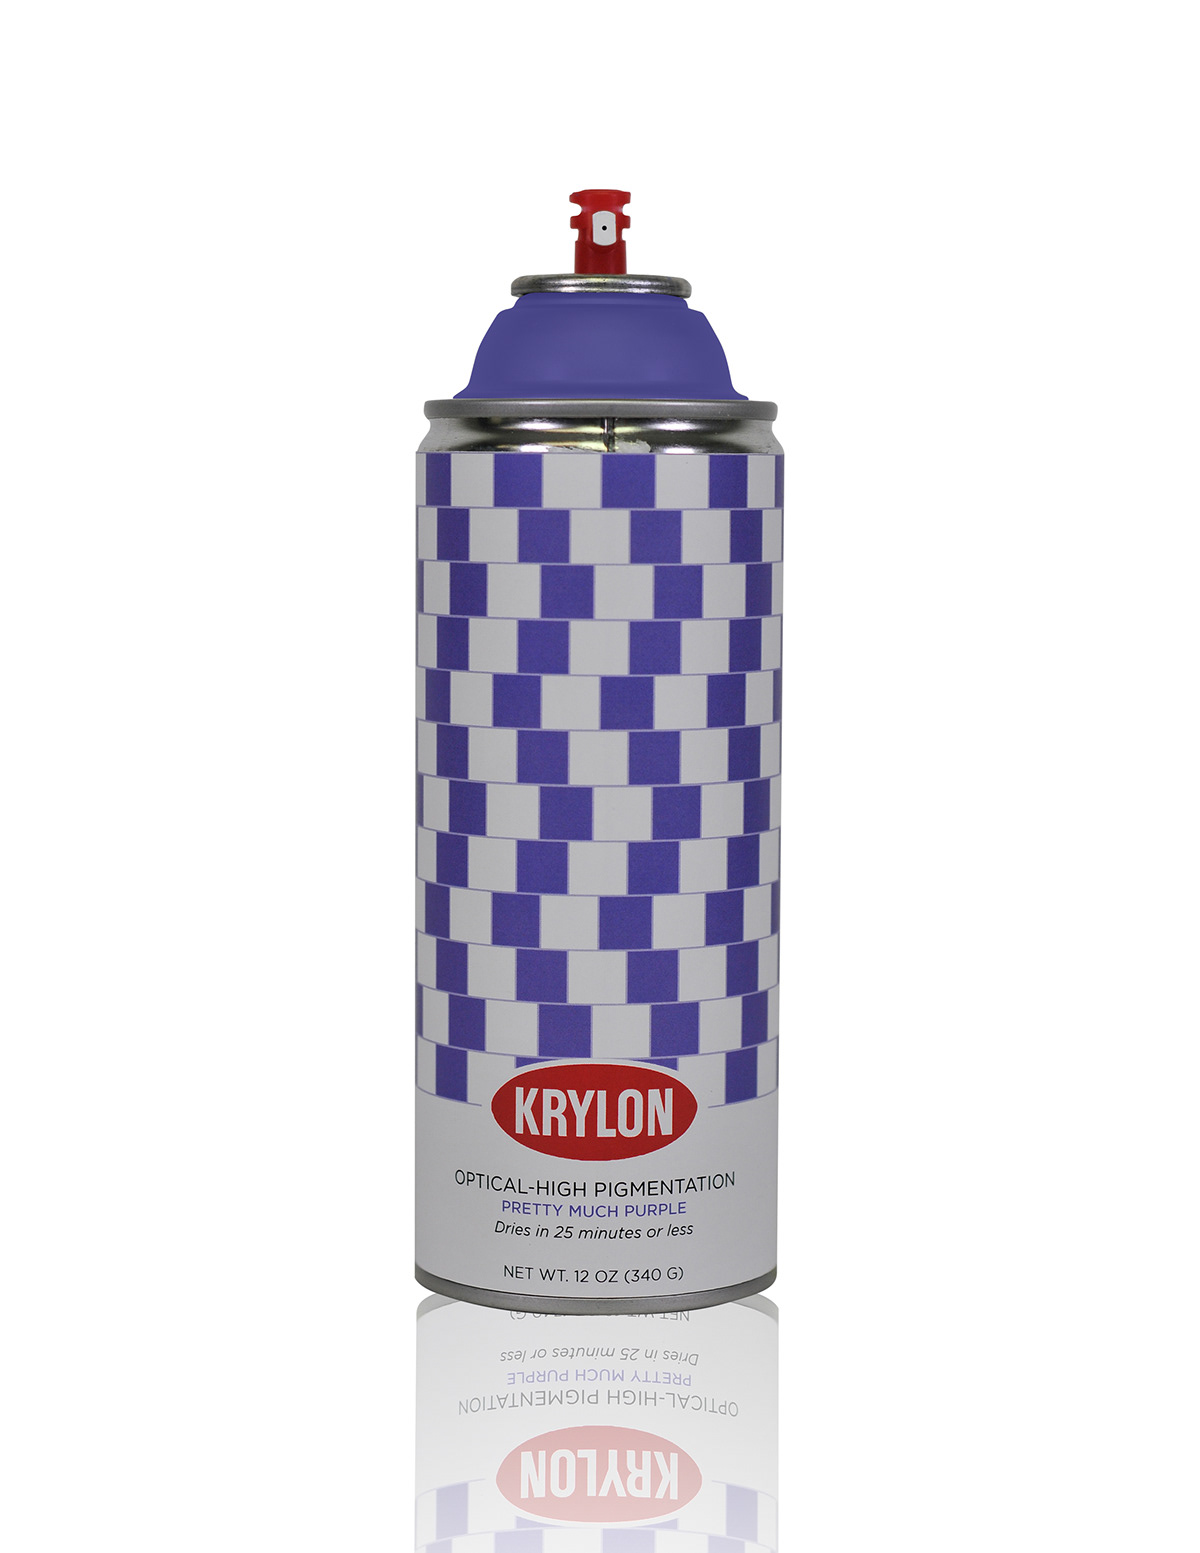 spray paint cans optical illusion pattern black purple green lines shapes krylon optical high pigmentation